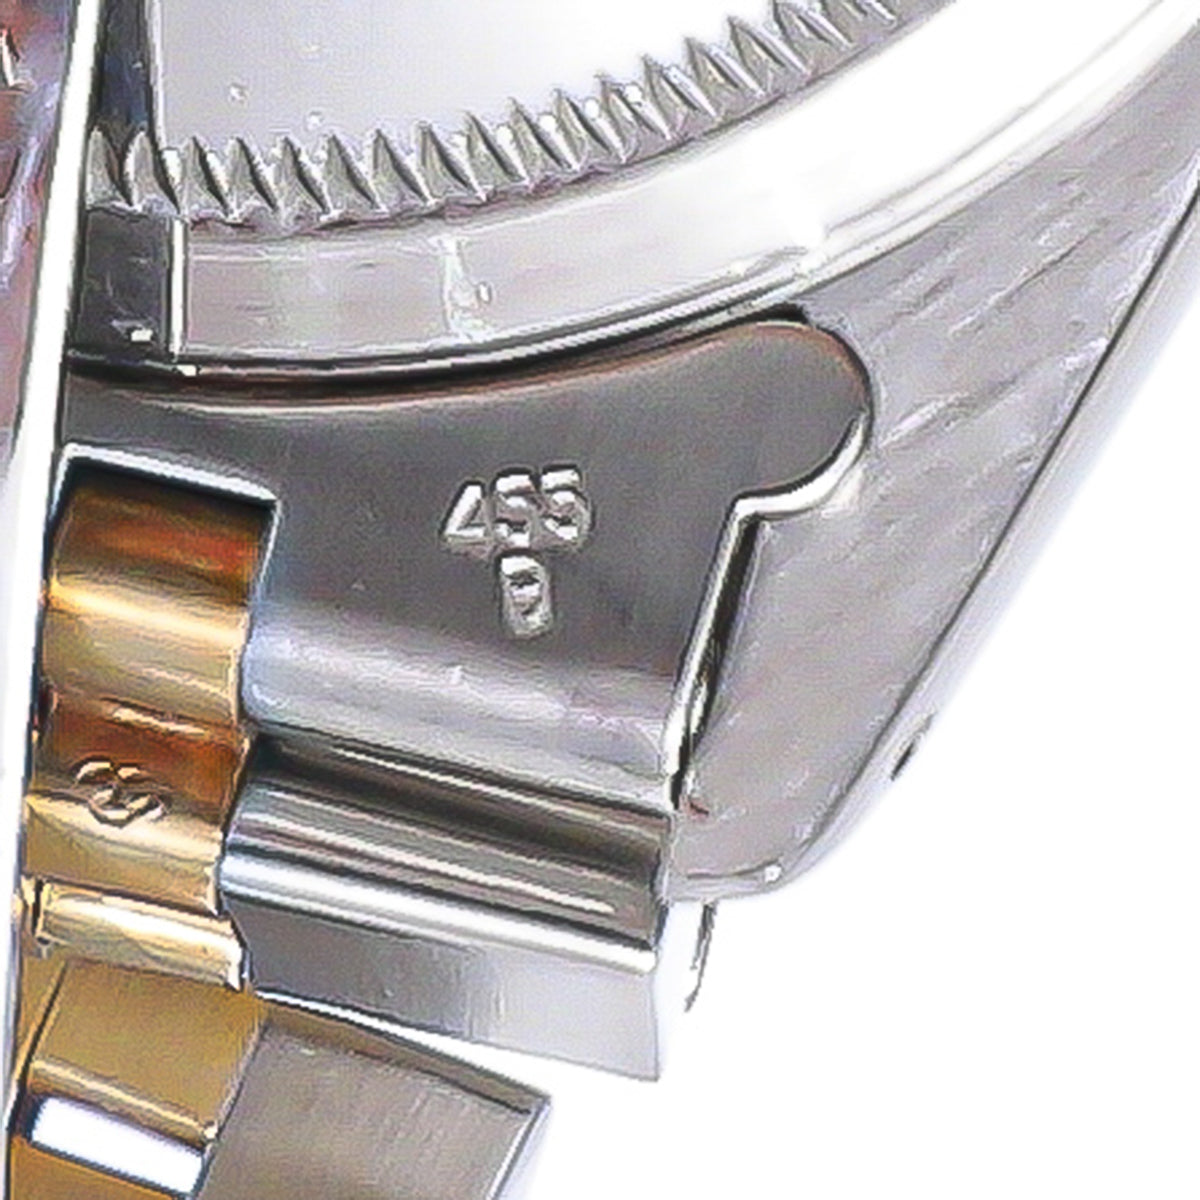 Rolex Datejust Steel and Gold Bracelet